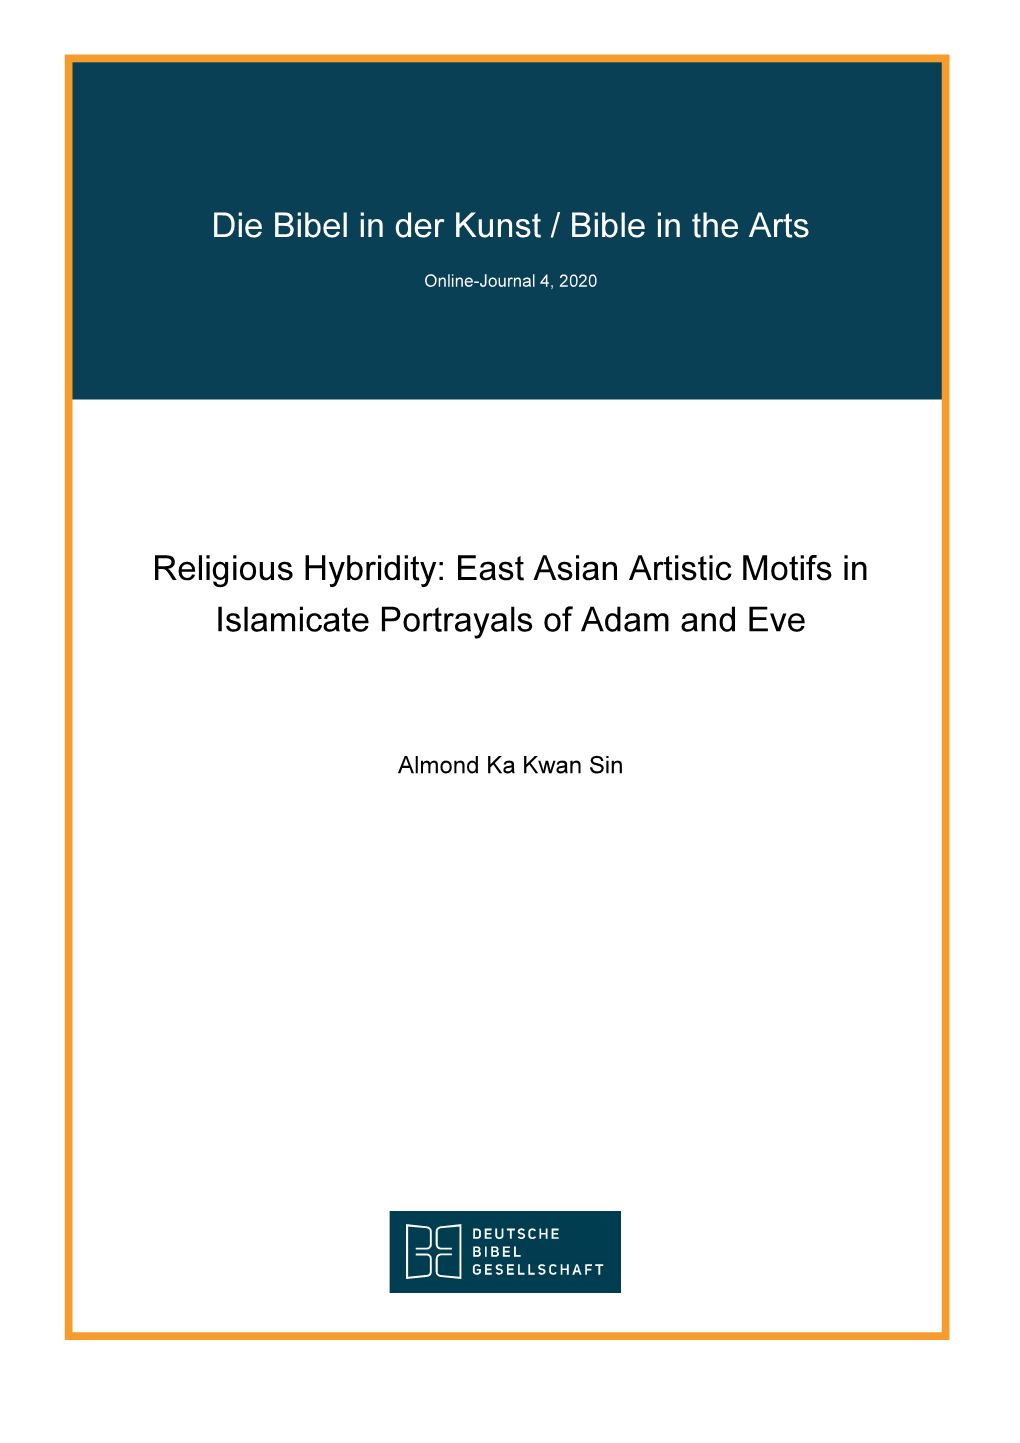 East Asian Artistic Motifs in Islamicate Portrayals of Adam and Eve